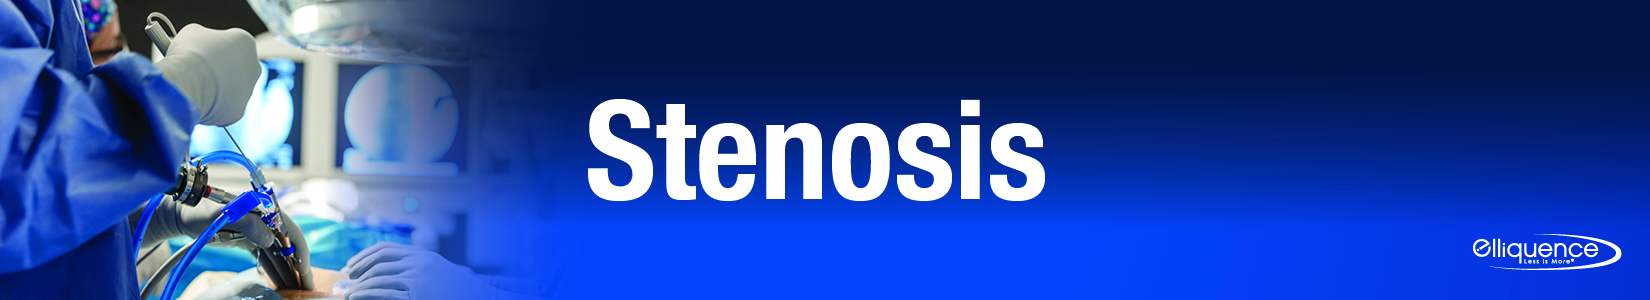 Stenosis Webinars